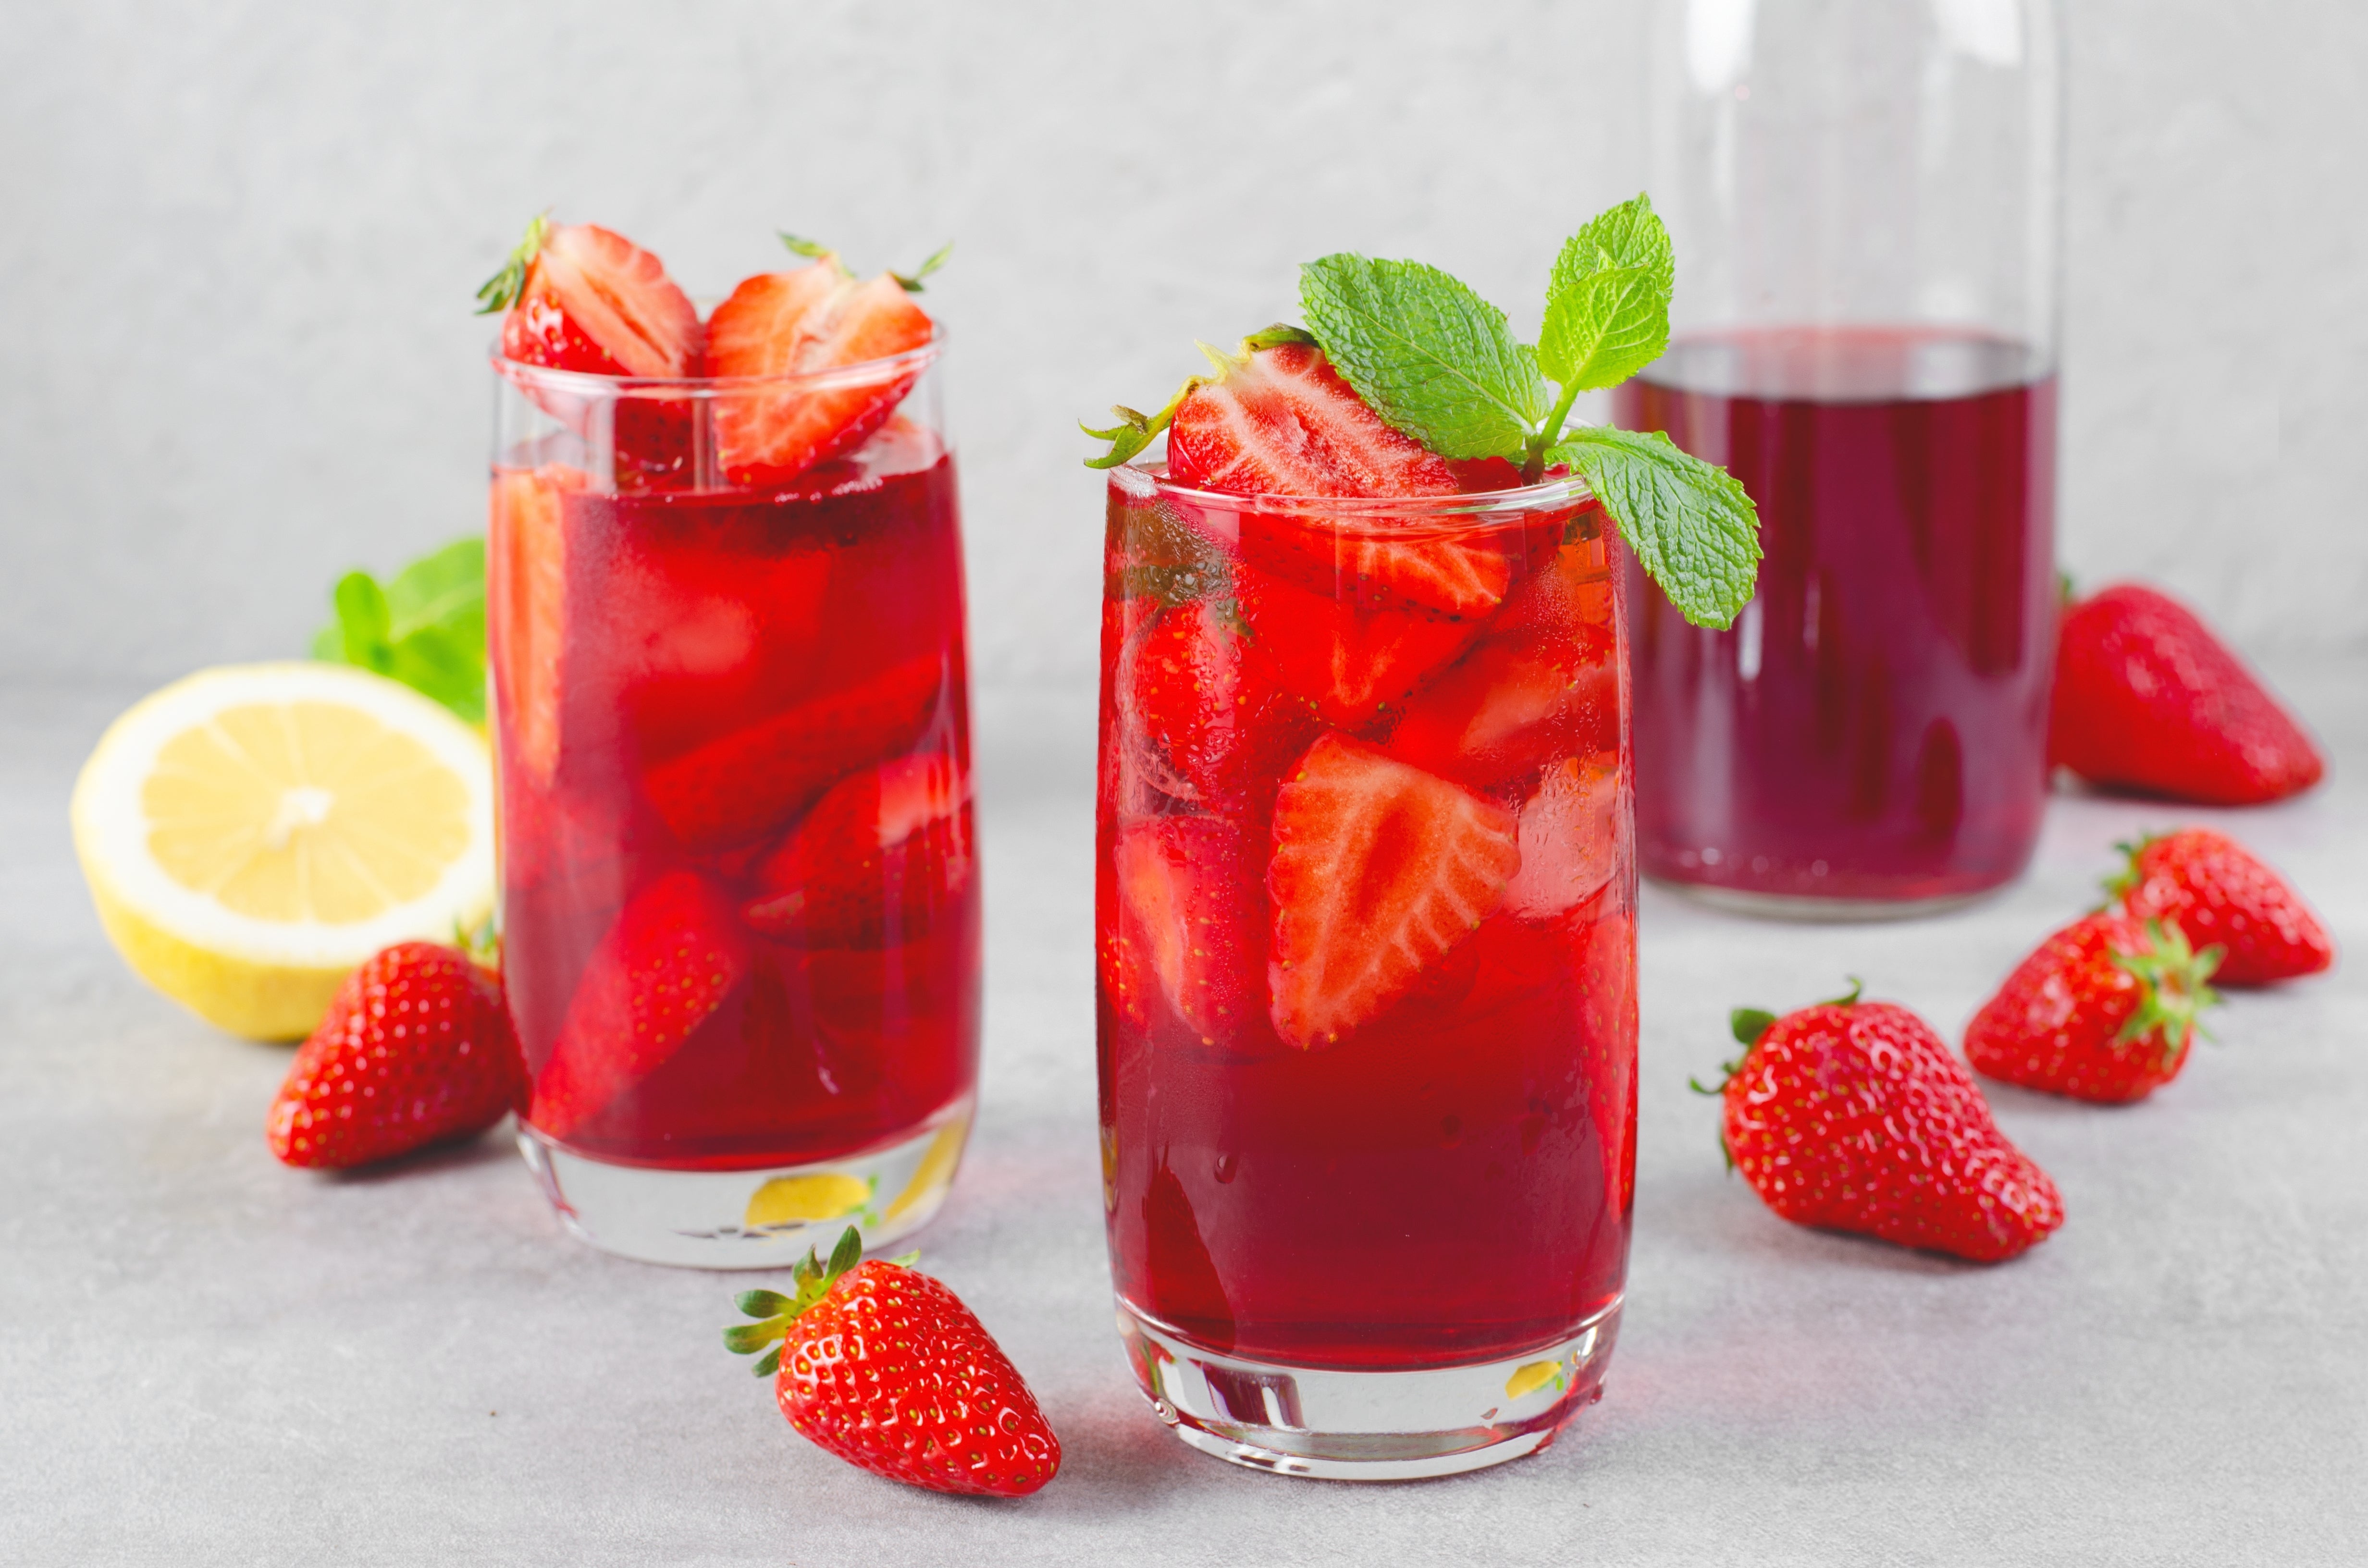 Monin Strawberry Syrup 1ltr